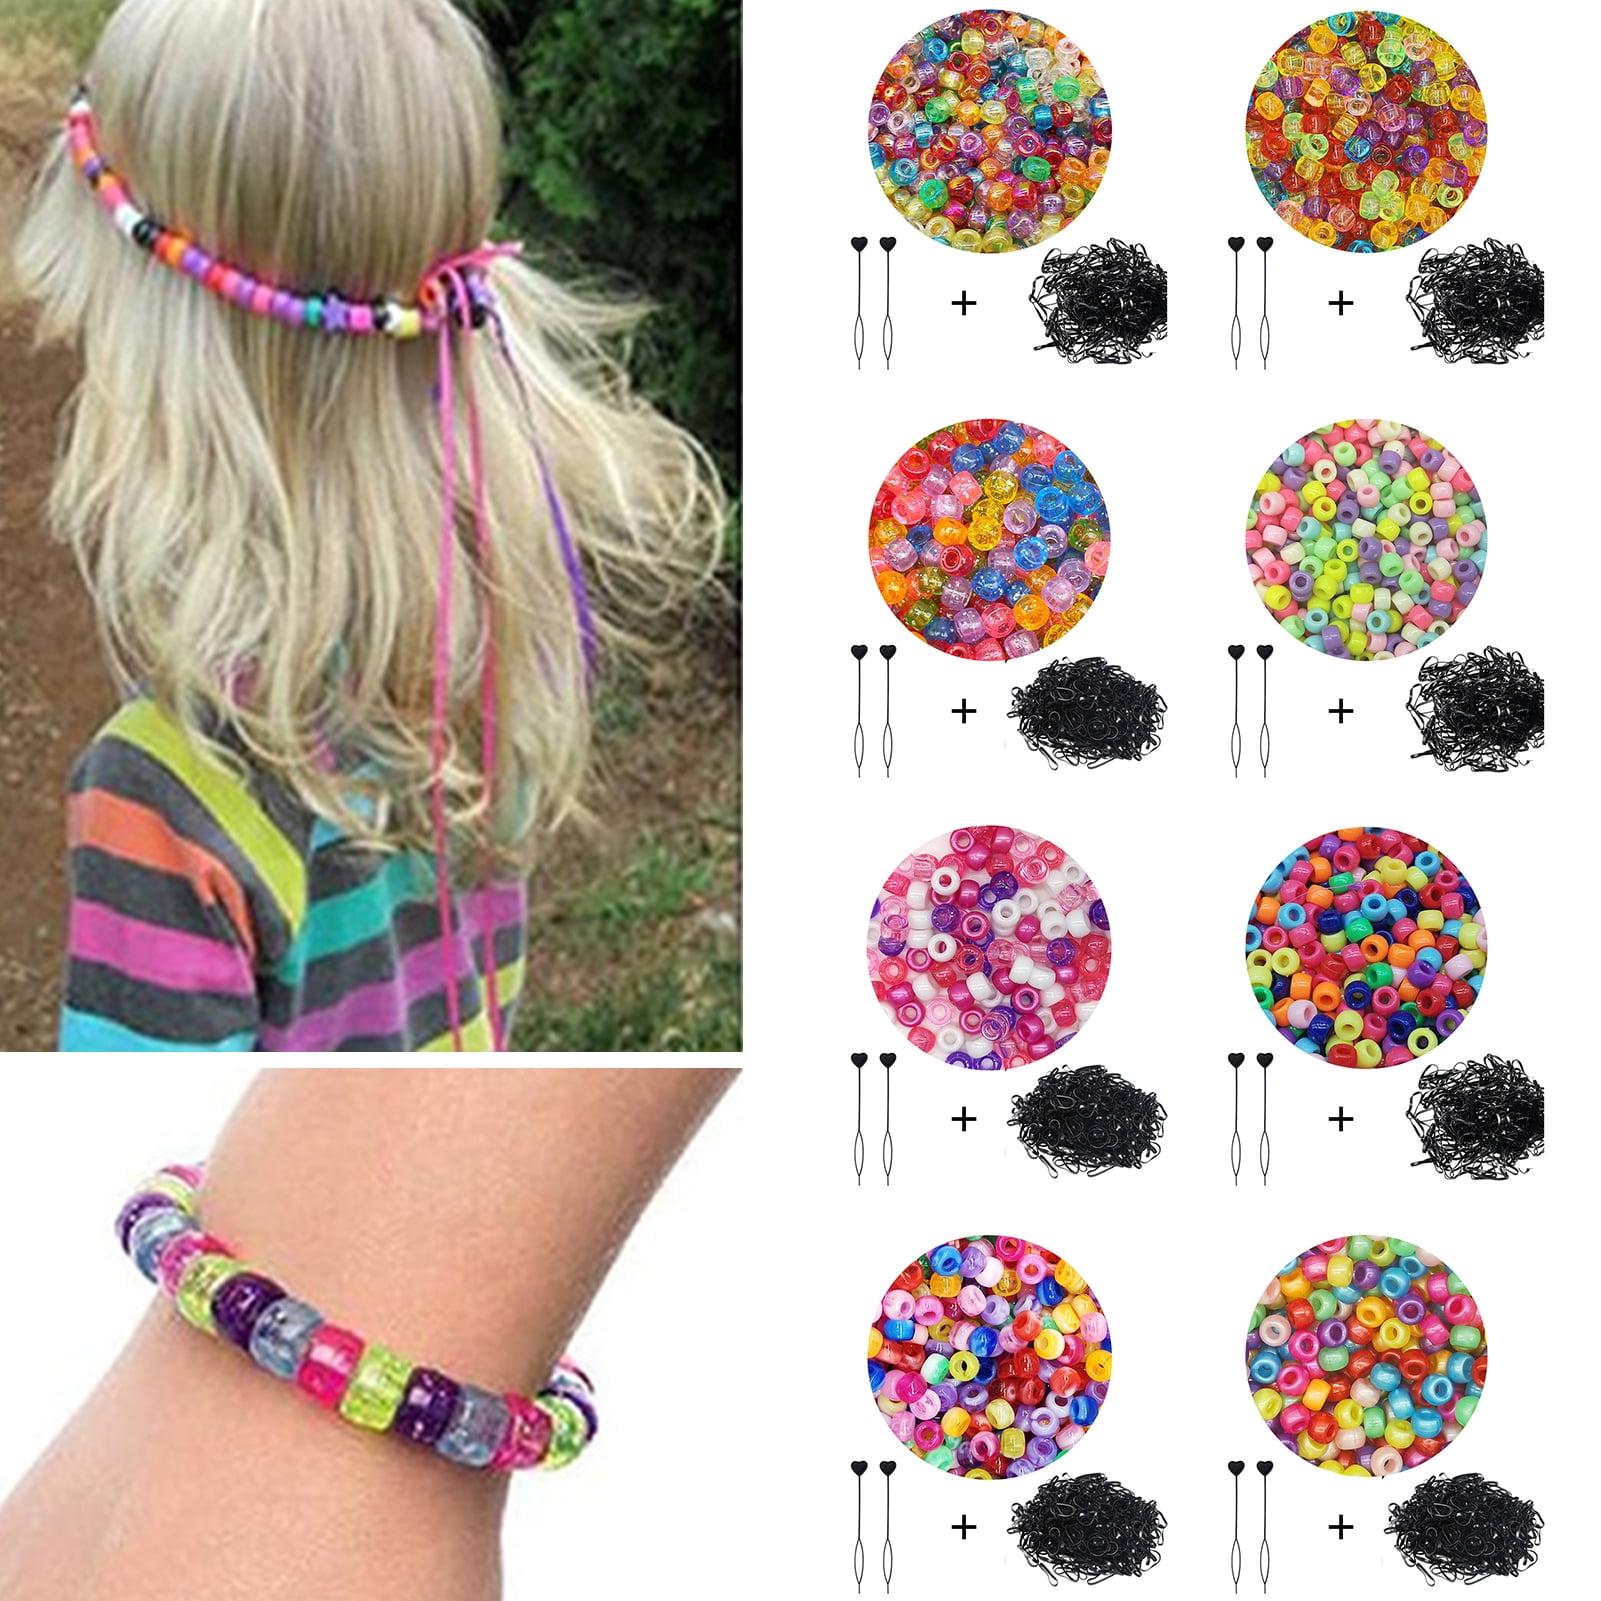 Tcwhniev Charm Bracelet Making Kit, Jewellery Making Kit for Girls Gorgeous Rainbow Beads/Mermaid Crafts Gifts Set,Jewelry Making DIY Necklaces